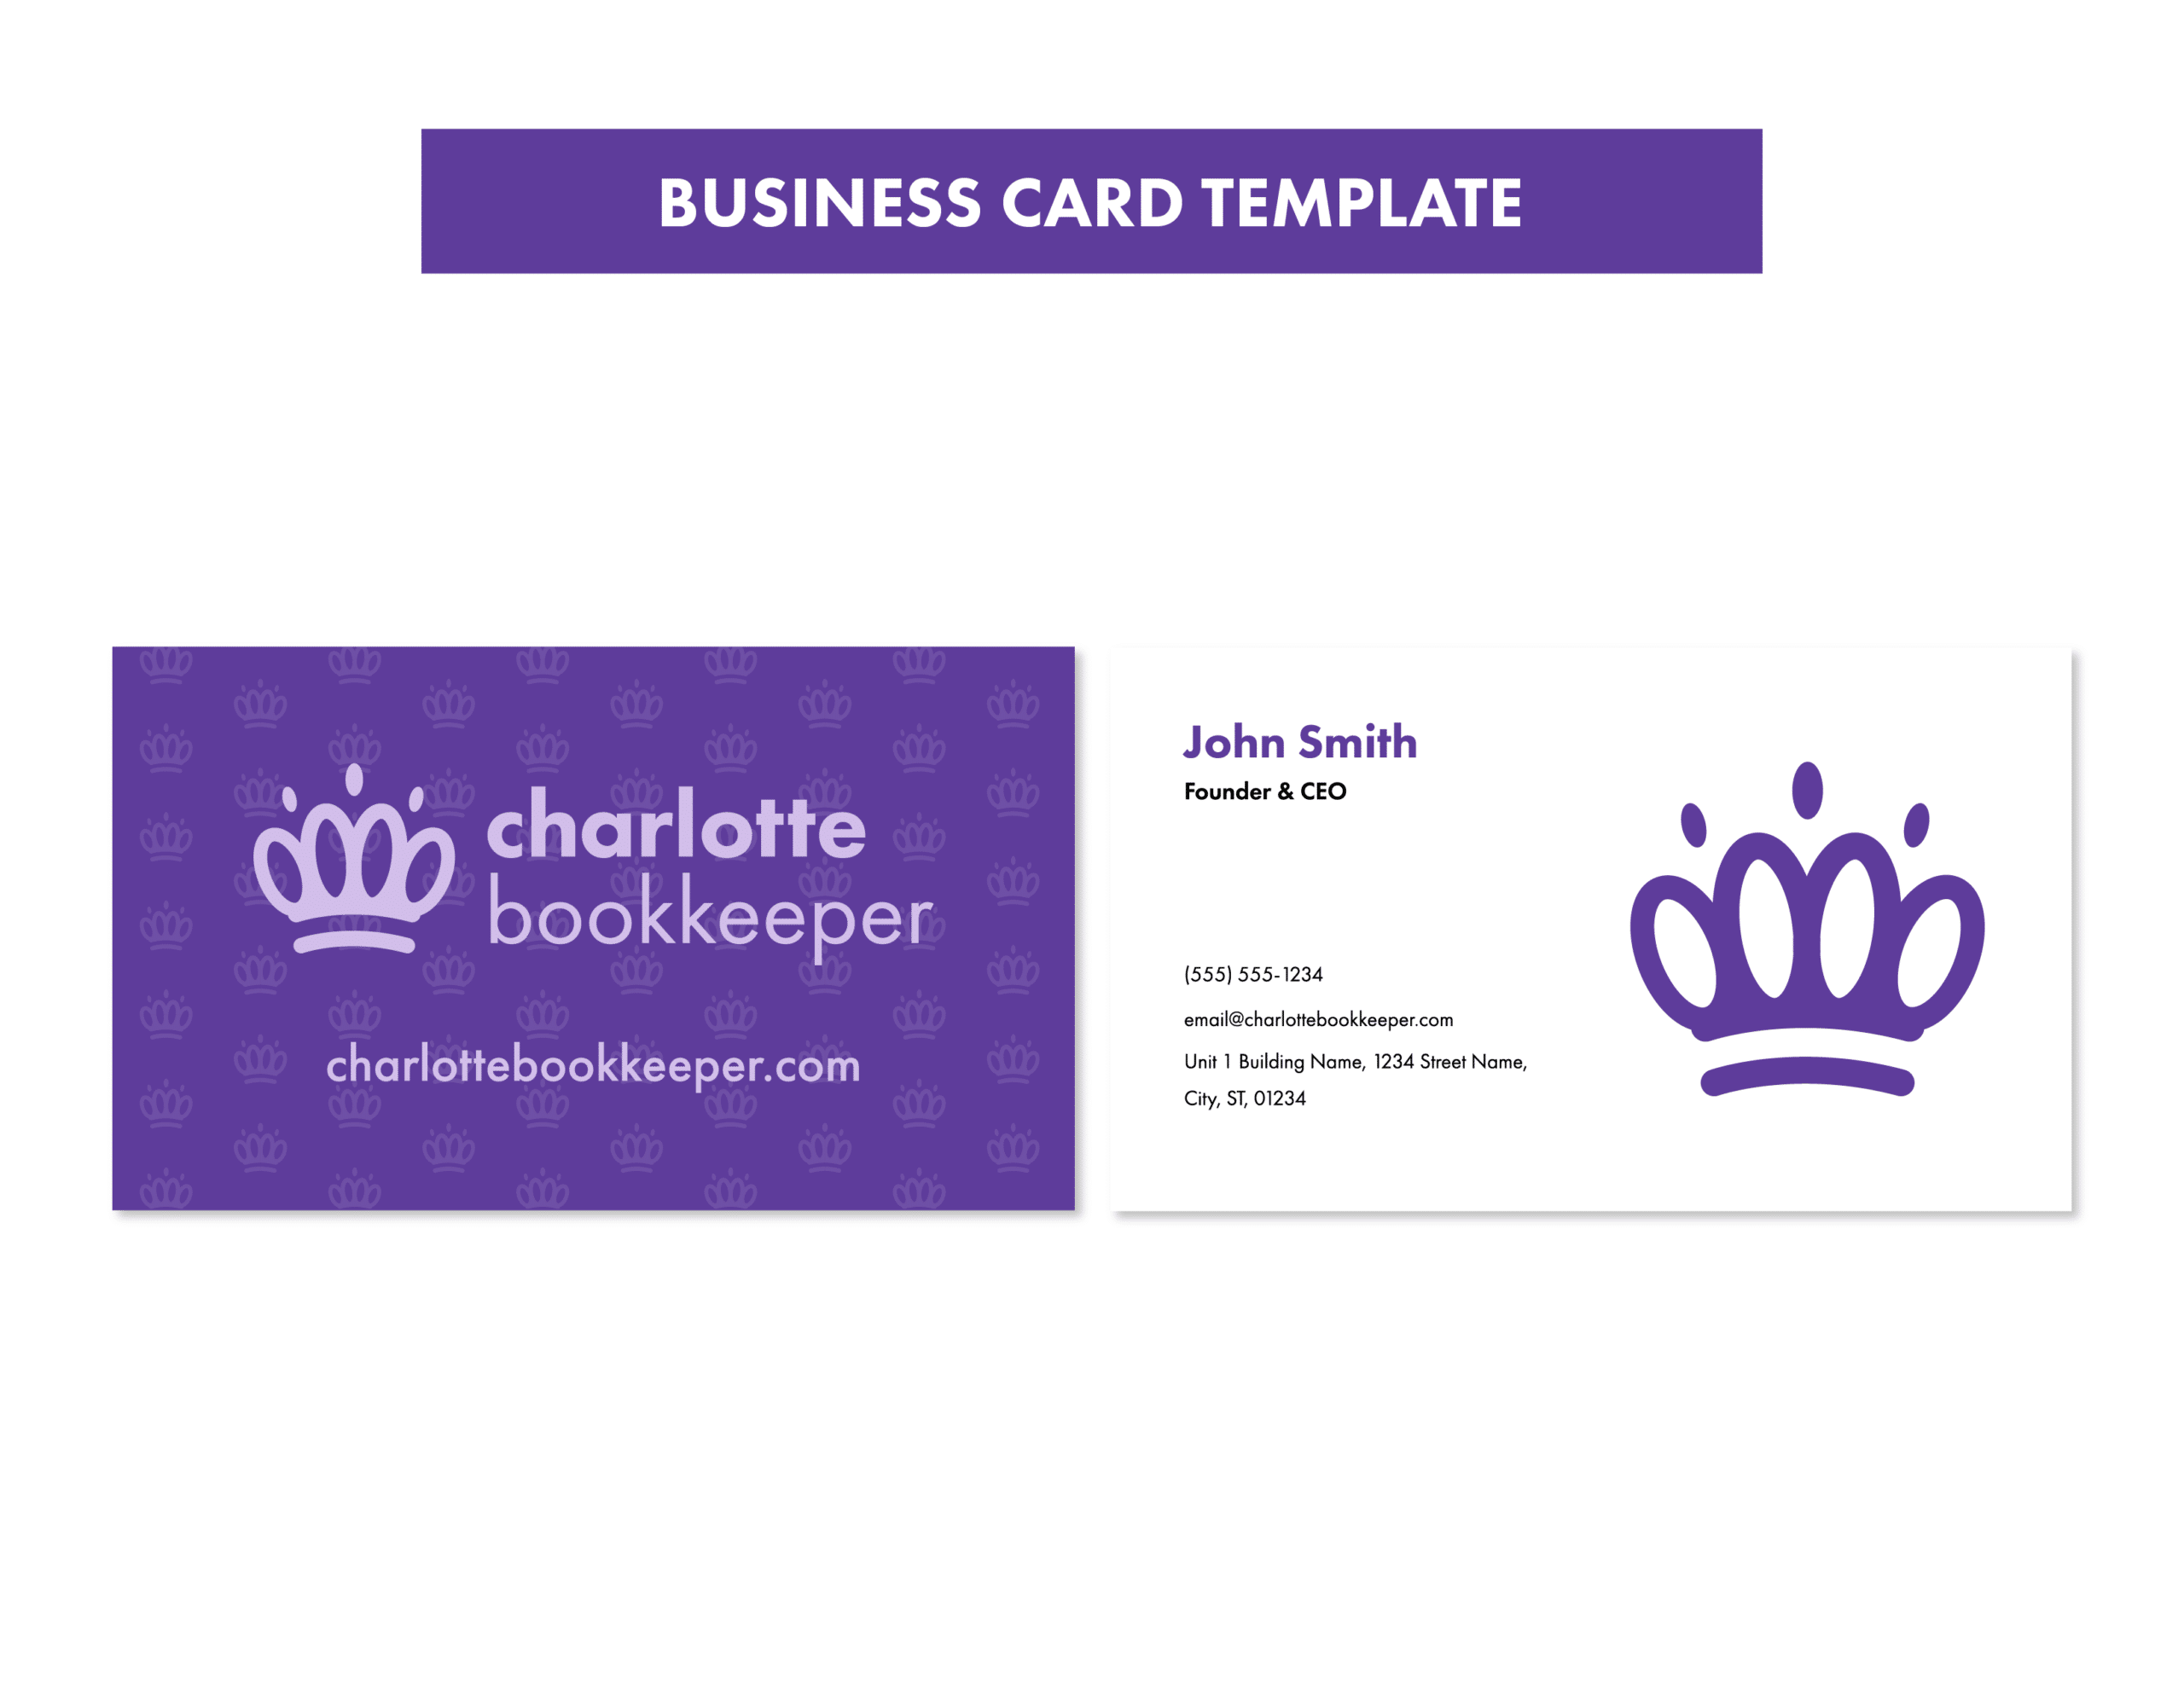 04CharlotteBK_Showcase_Business Card Template